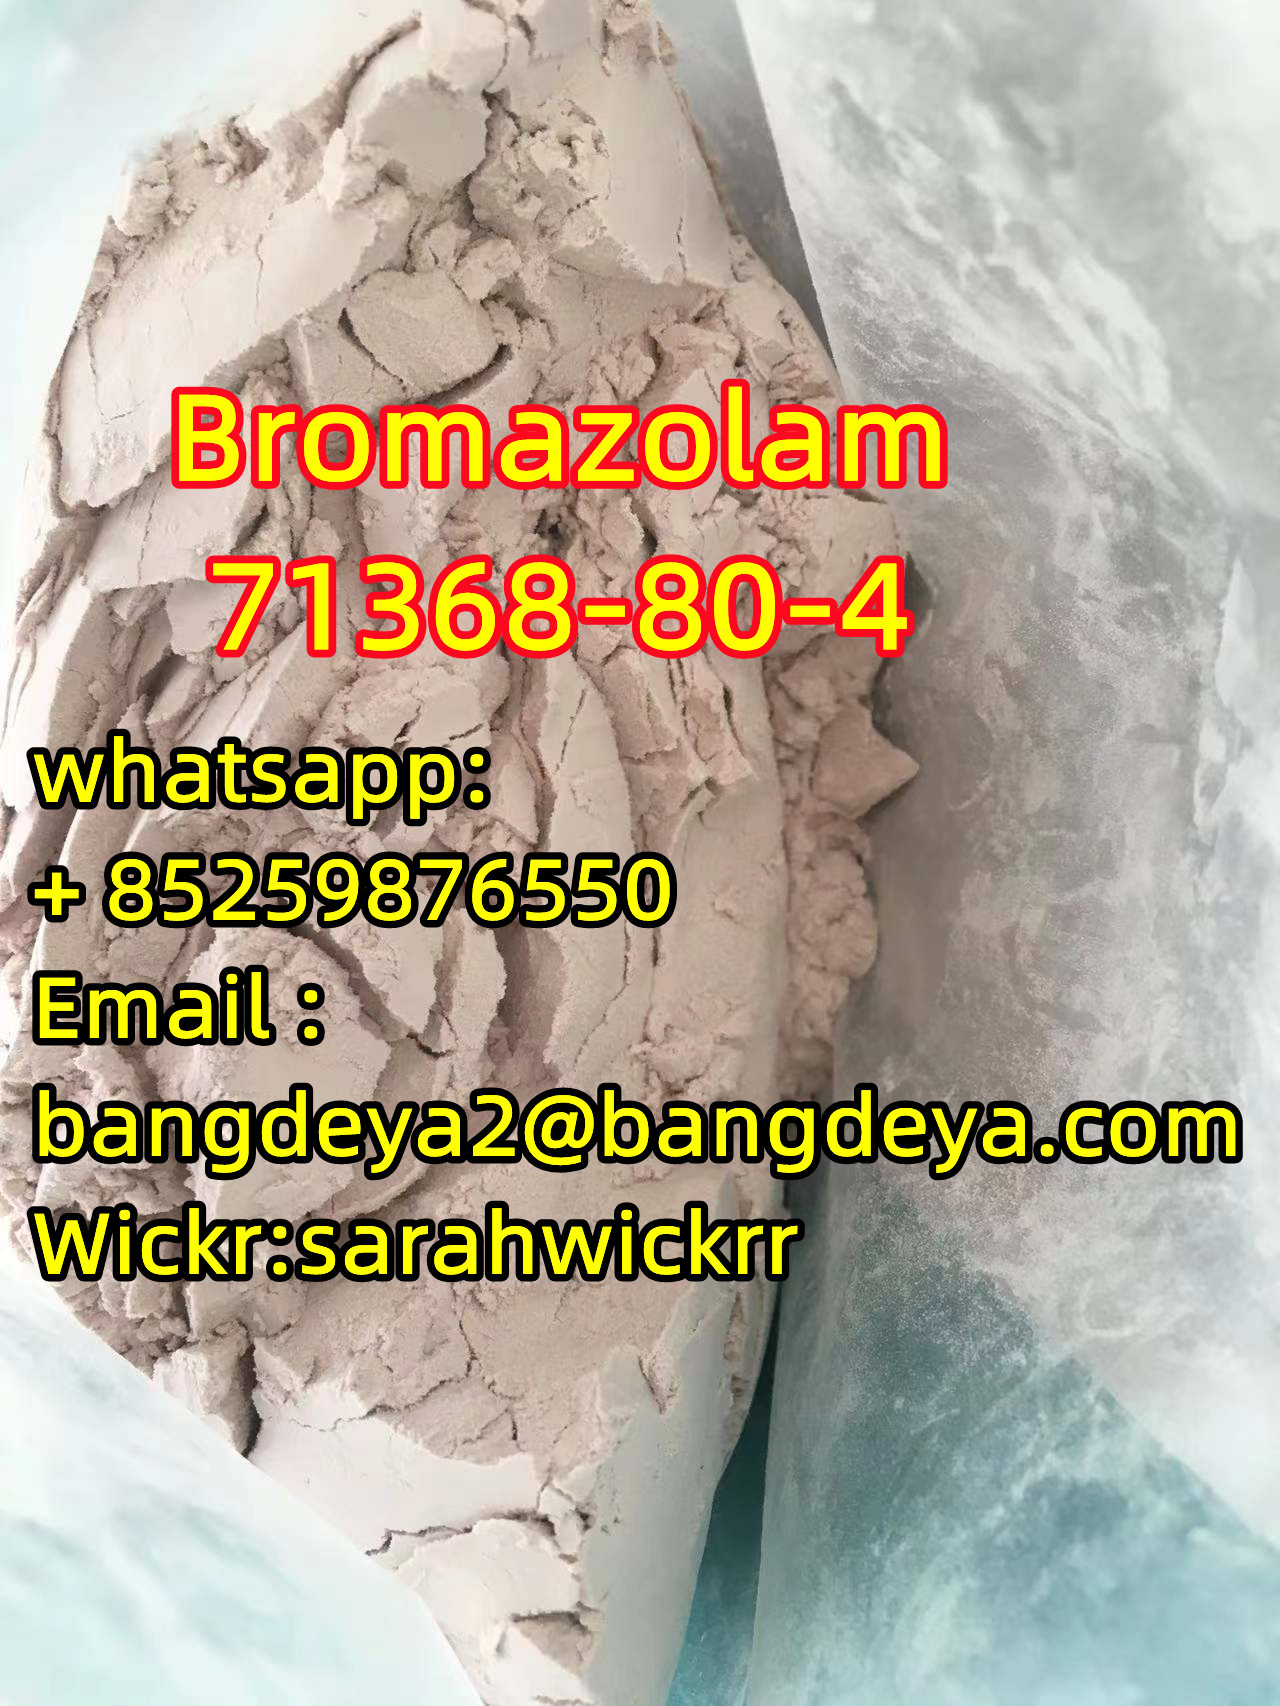 Bromazolam cas71368-80-4.jpg